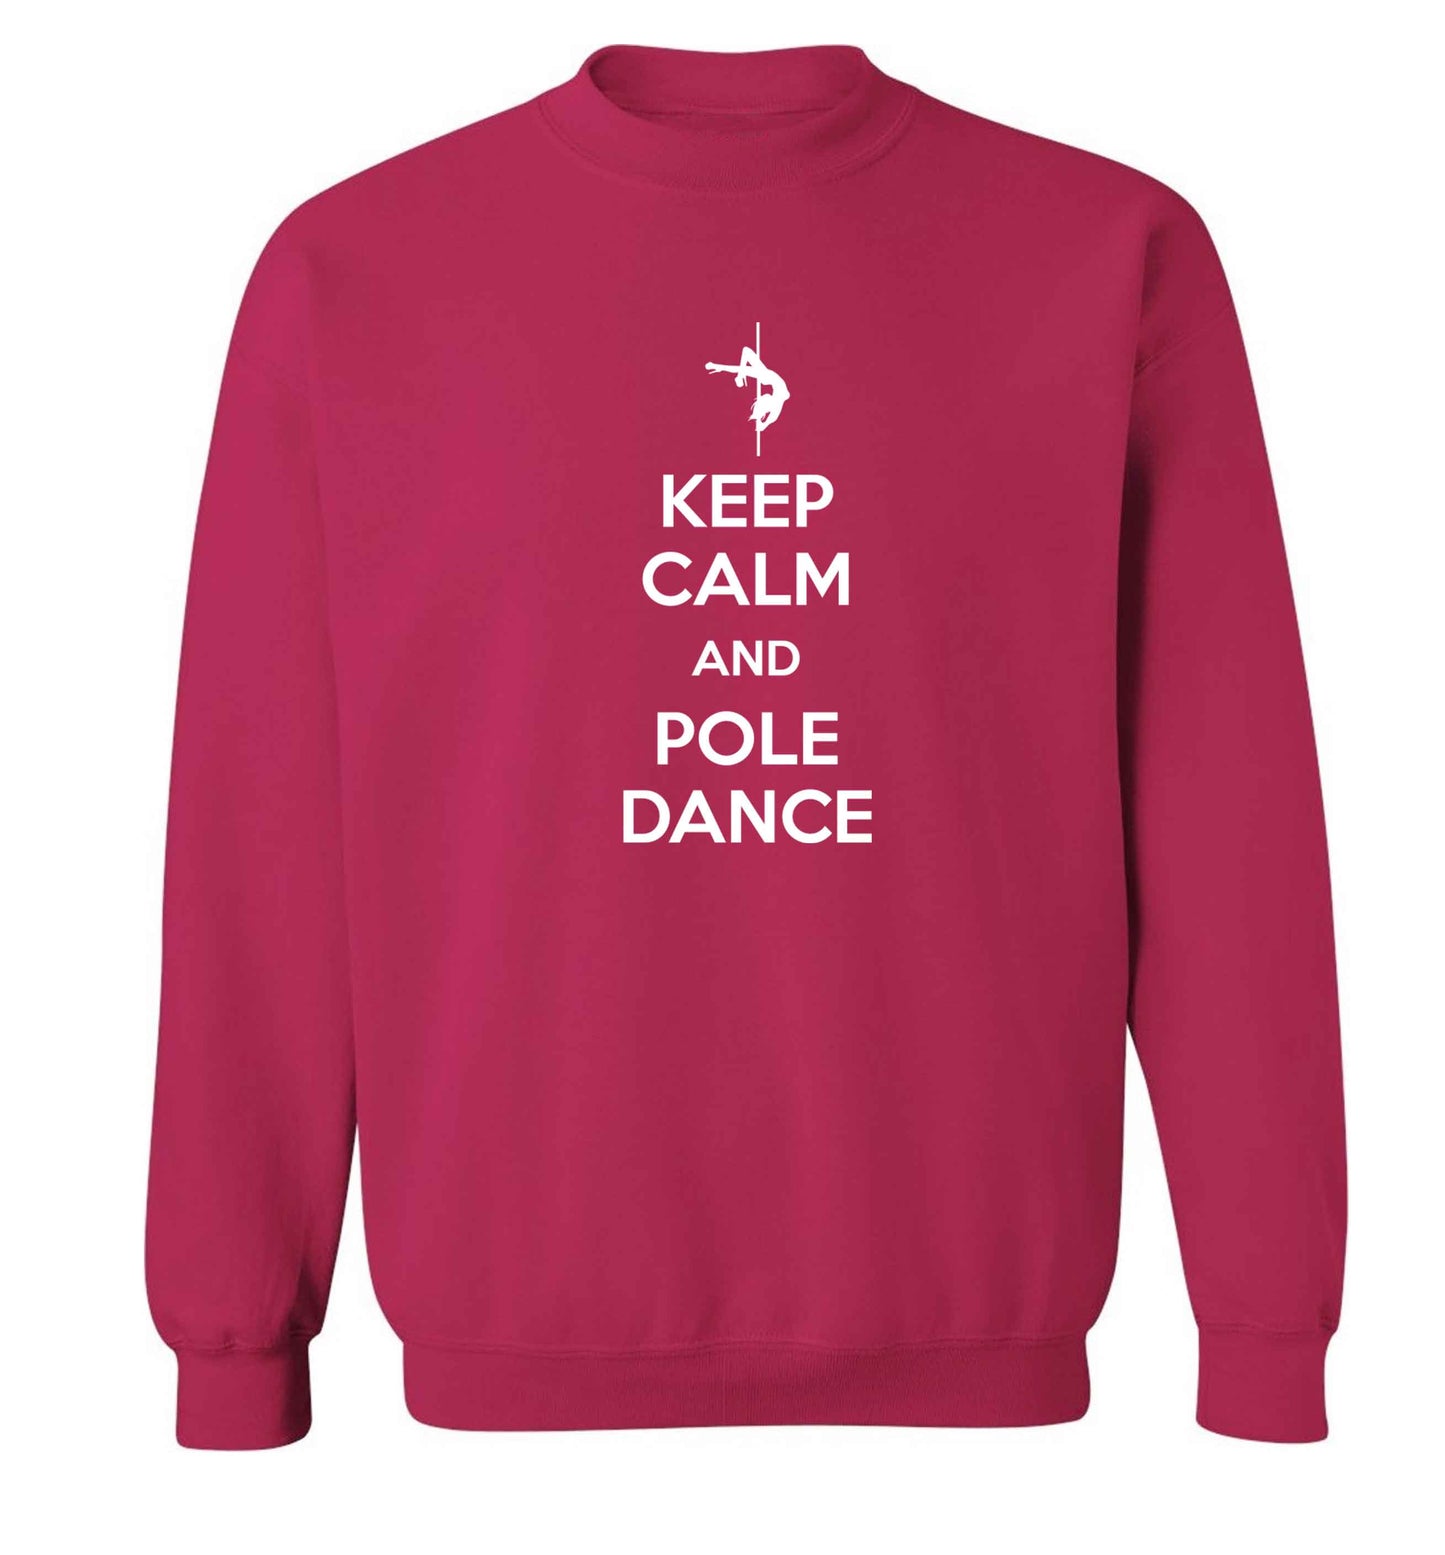 Best Things Happen Dancing adult's unisex pink sweater 2XL